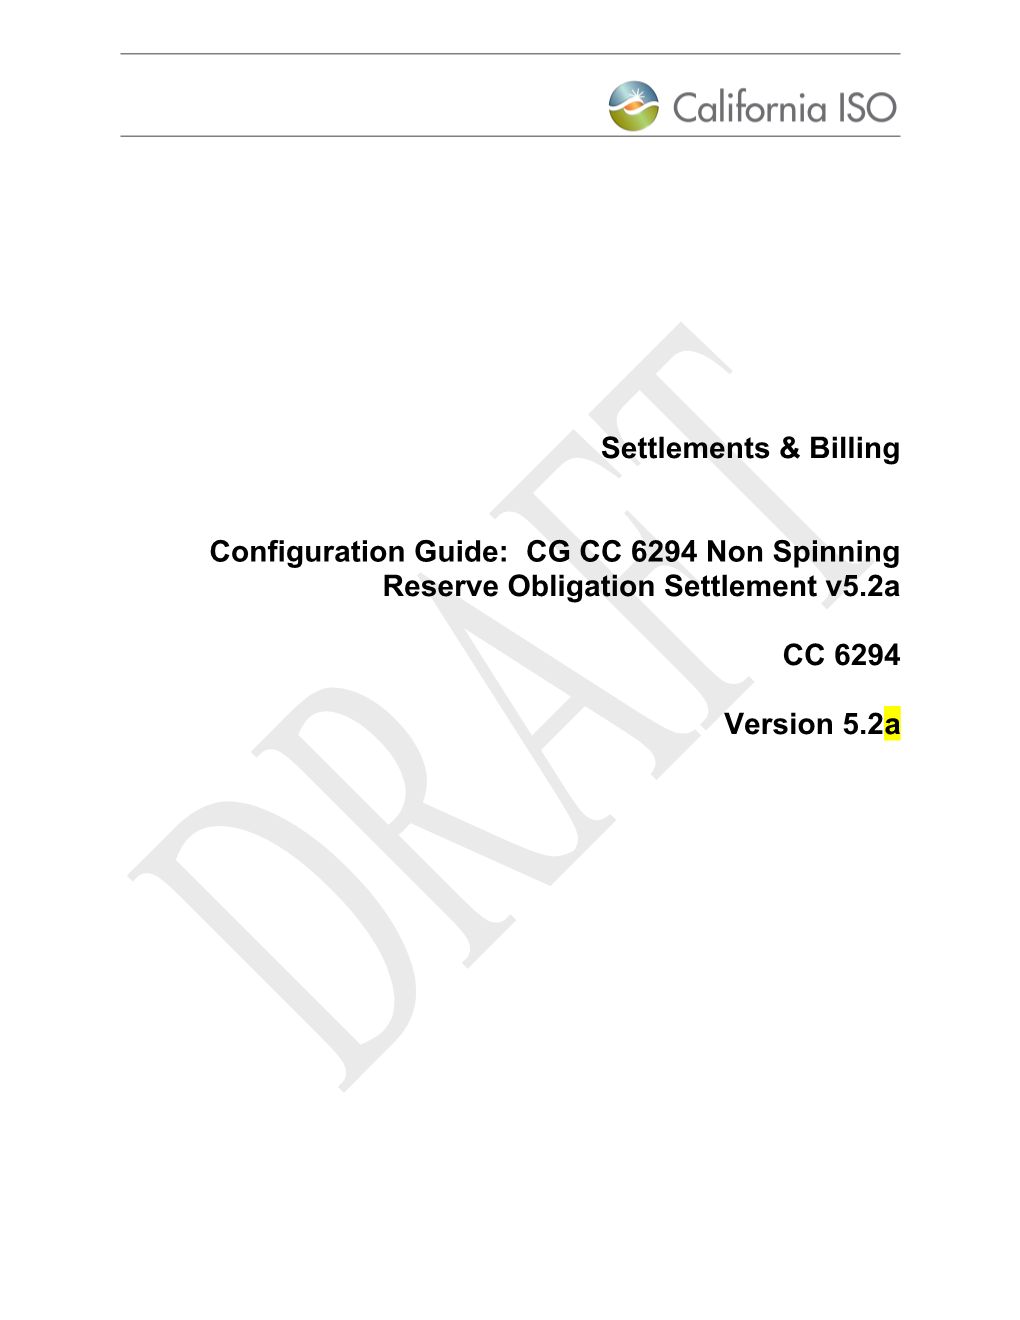 CG CC 6294 Non Spinning Reserve Obligation Settlement V5.2A